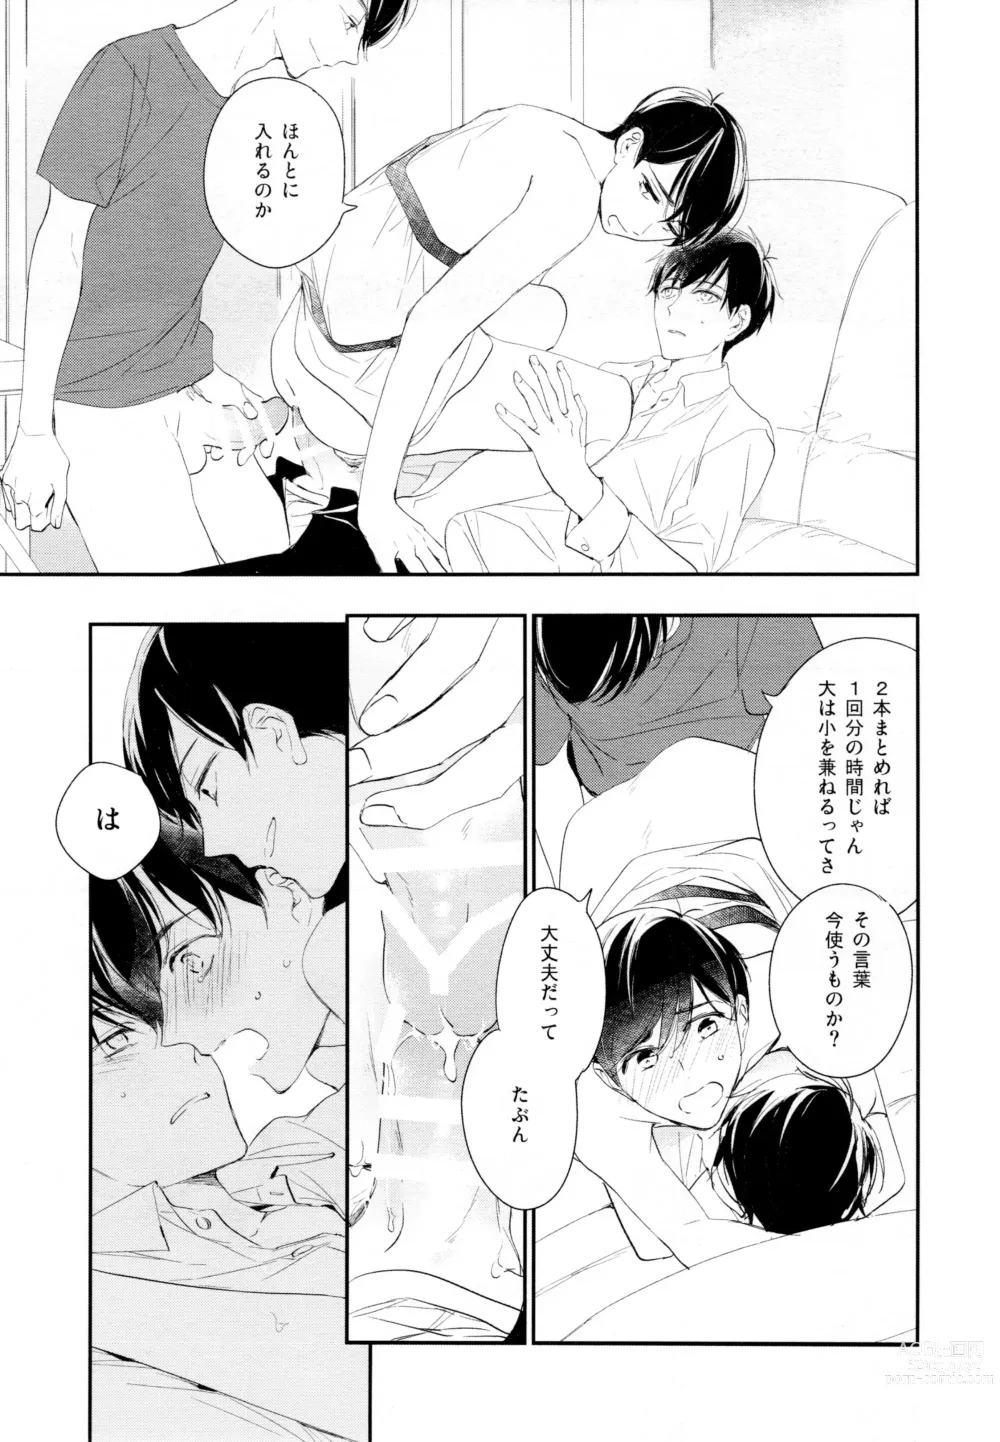 Page 78 of doujinshi Hikari ni Tsuite